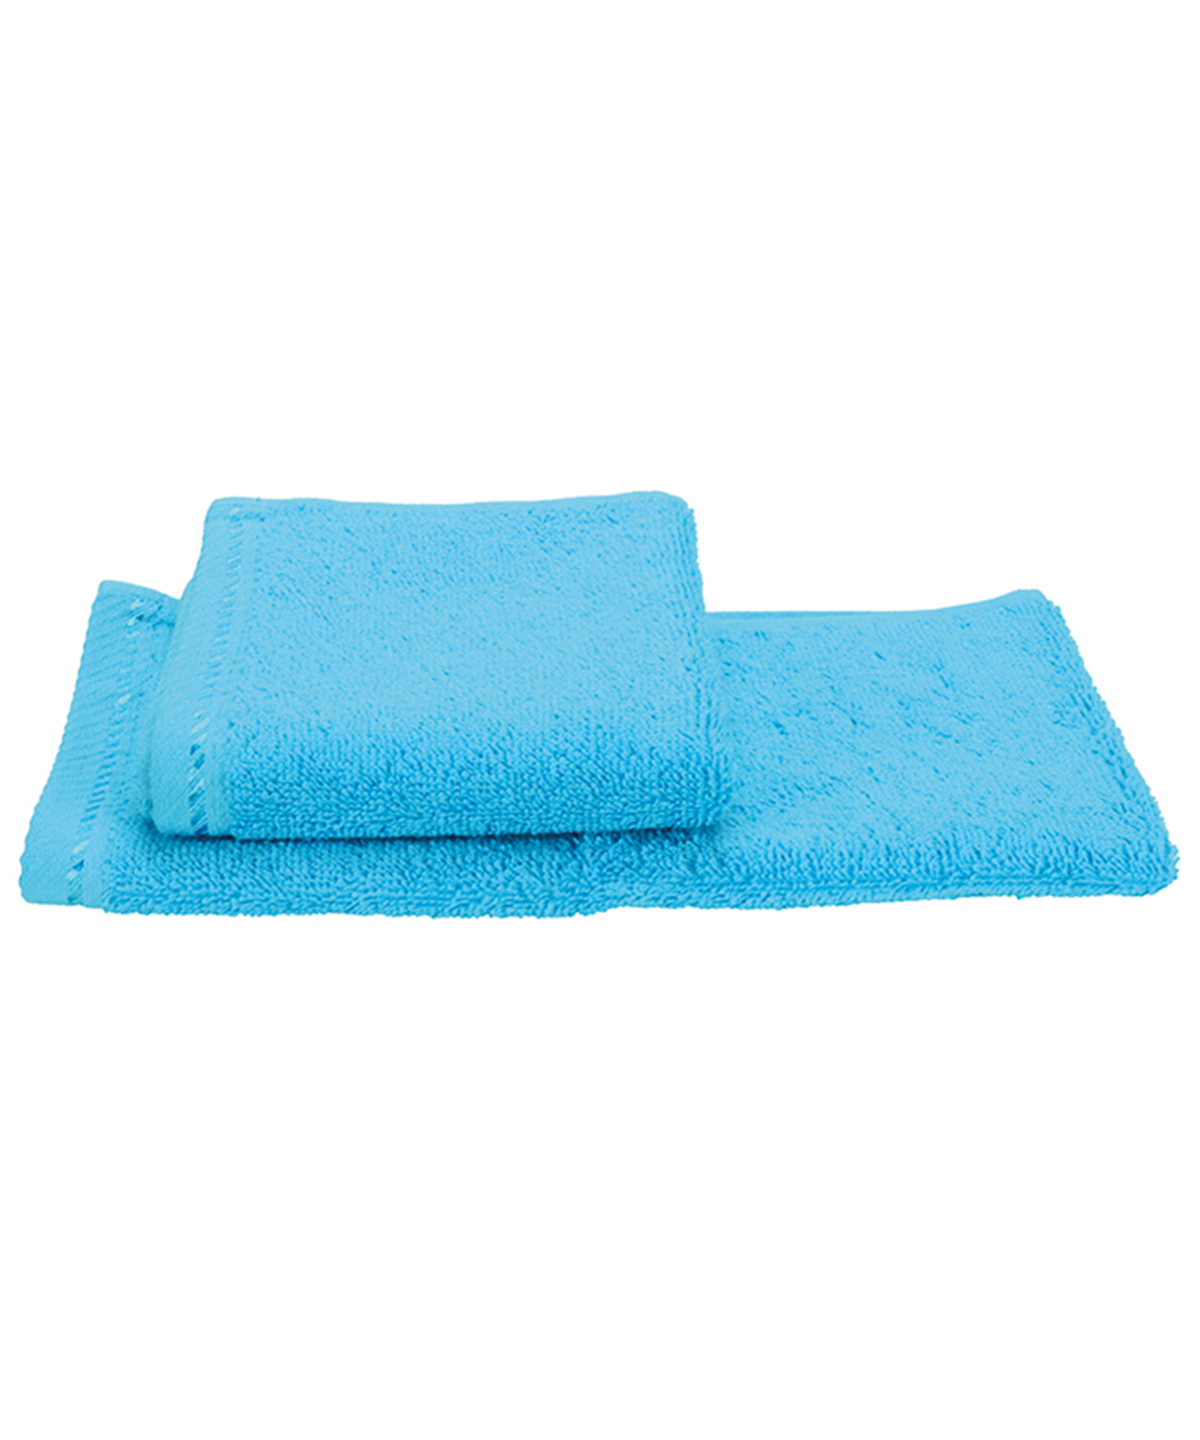 Guest Towel Aqua Size One Size